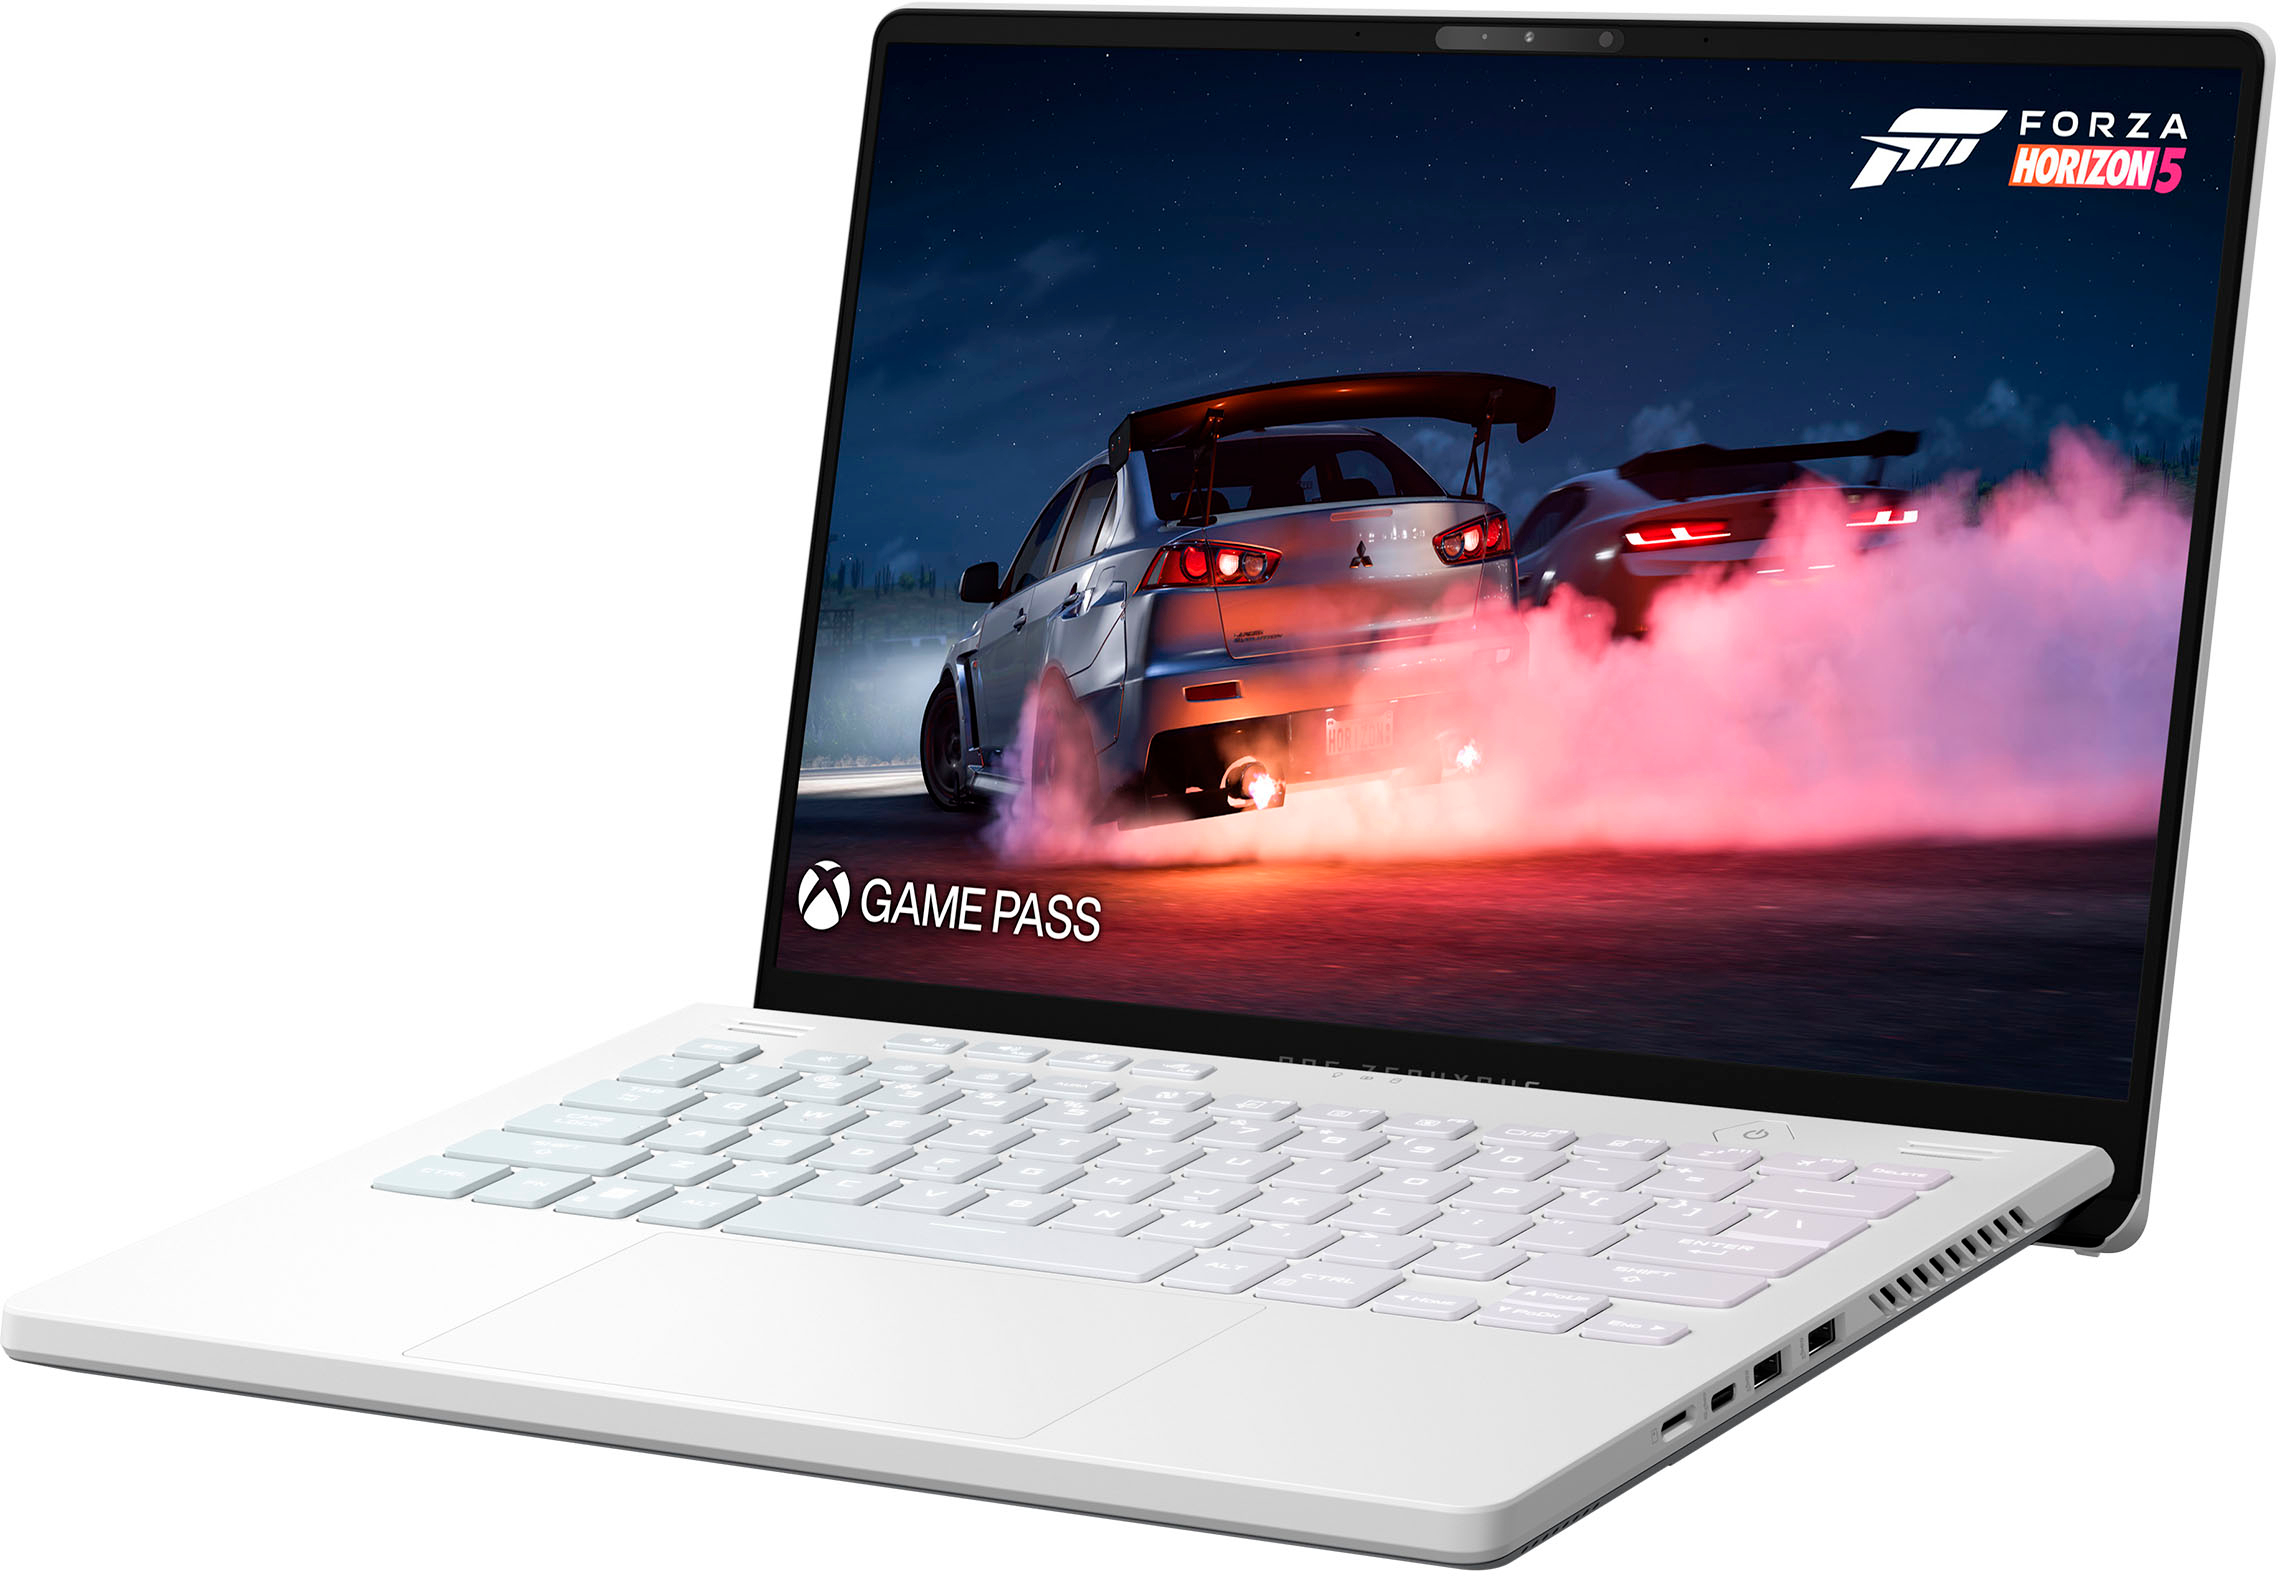  ASUS - ROG Zephyrus G14 14 Gaming Laptop - AMD Ryzen 9 - 16GB  Memory - NVIDIA GeForce RTX 2060 - 1TB SSD - Moonlight White : Electronics